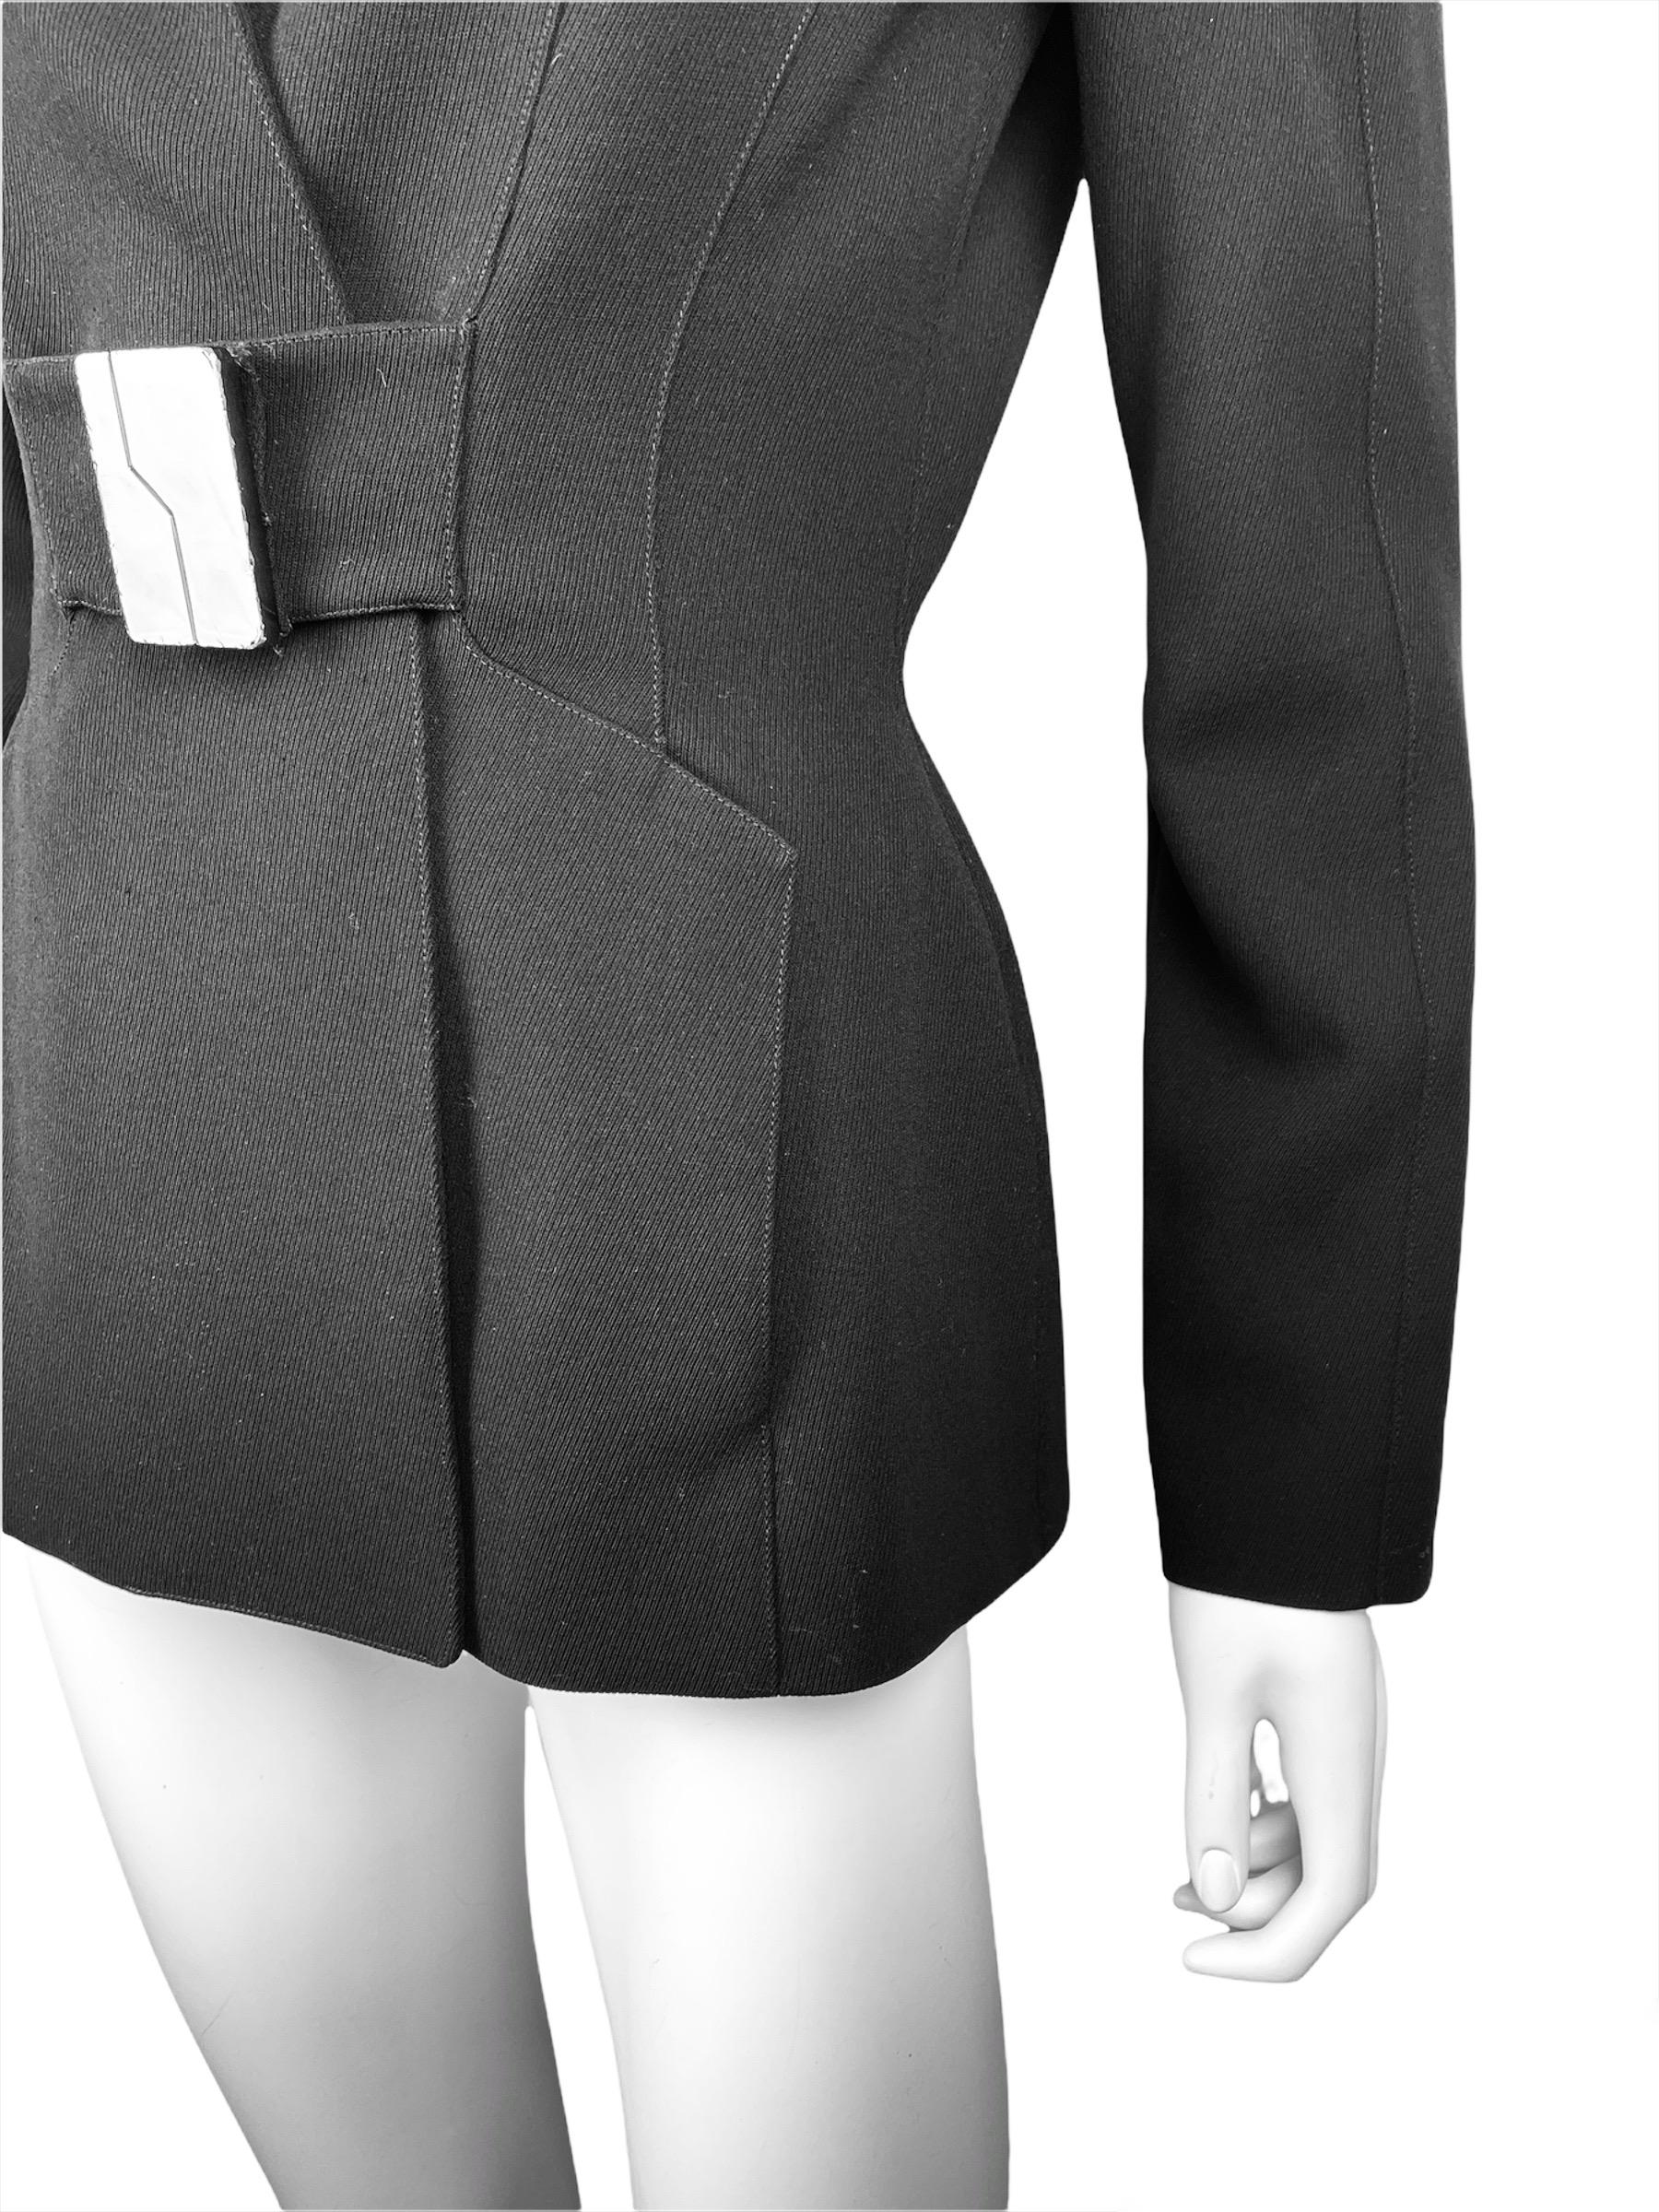 Thierry Mugler Vintage Black Jacket & Skirt Set 3